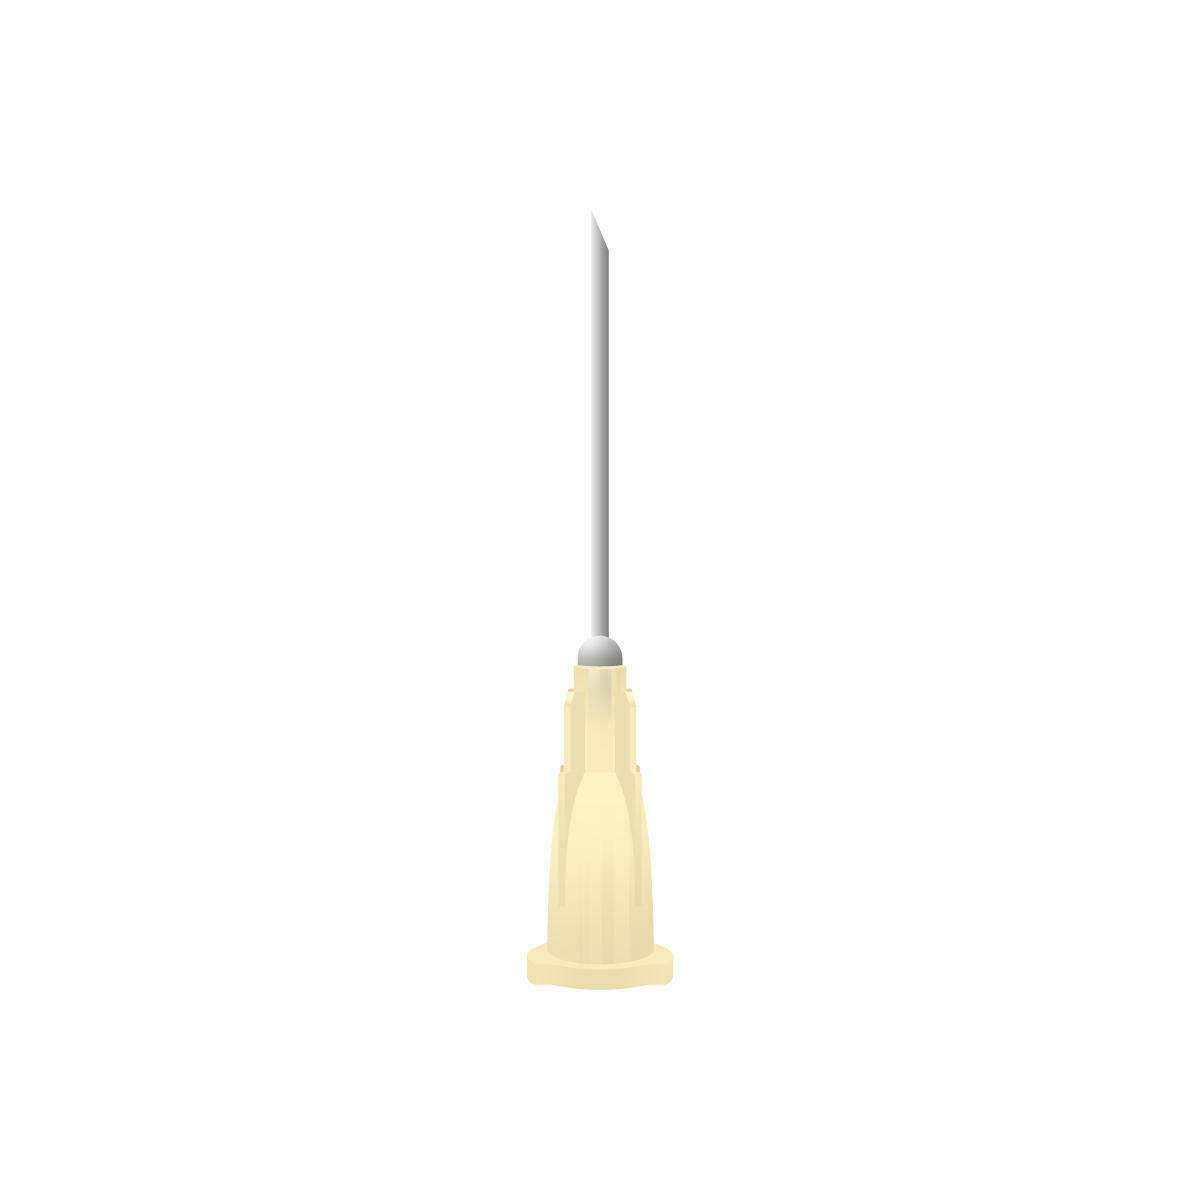 18g 1.5 inch Agriject Disposable Needles Poly Hub - UKMEDI